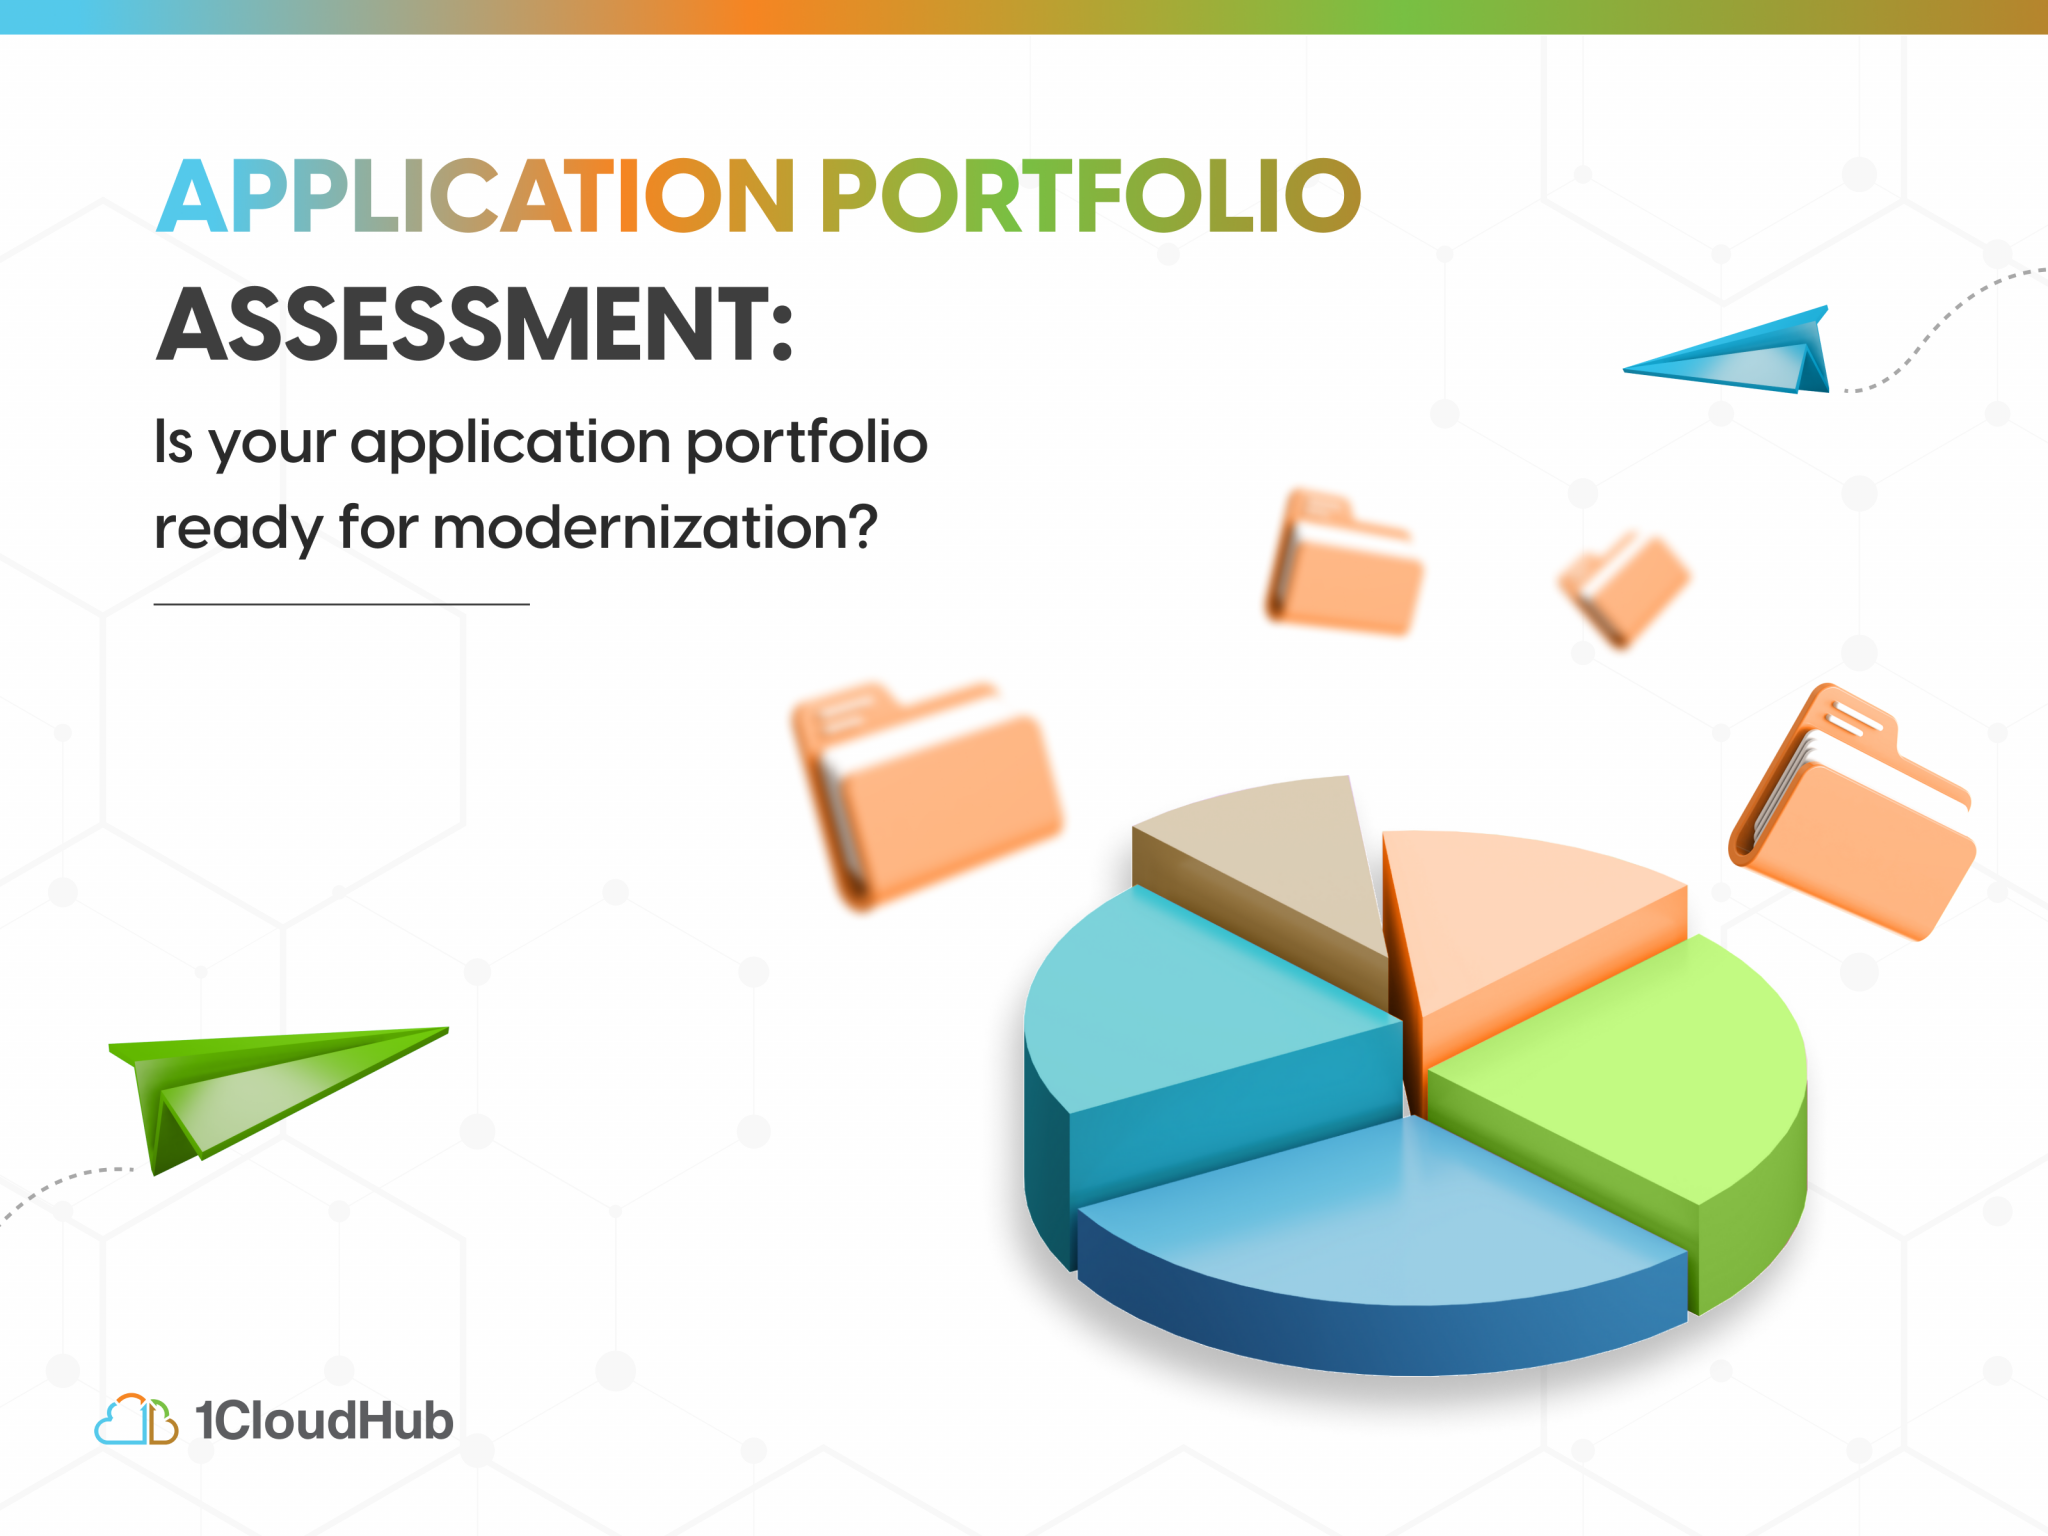 Application Portfolio Assessment: Is your application portfolio ready for modernization?